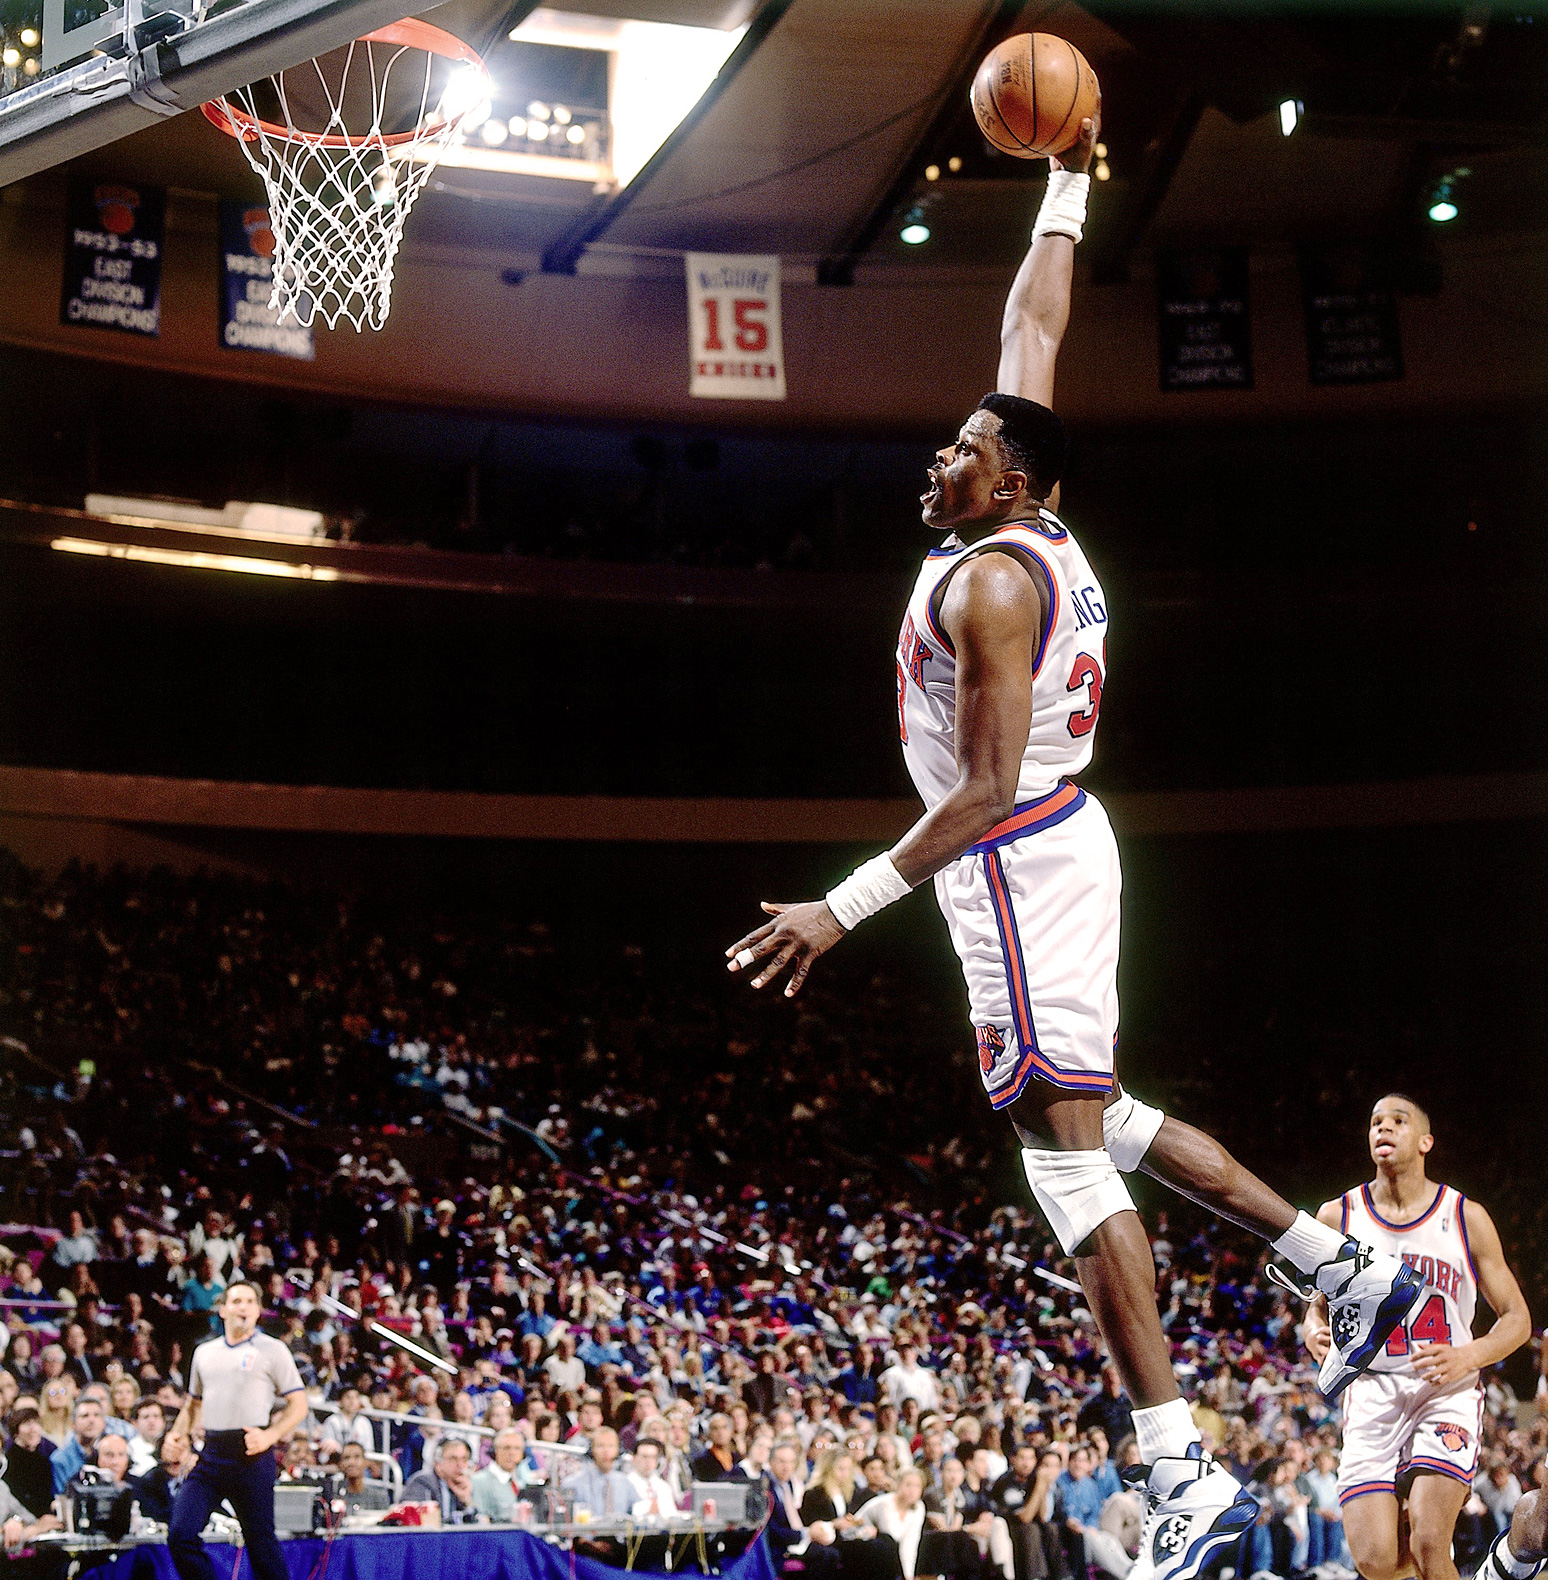 2. Patrick Ewing 25 Greatest Knicks